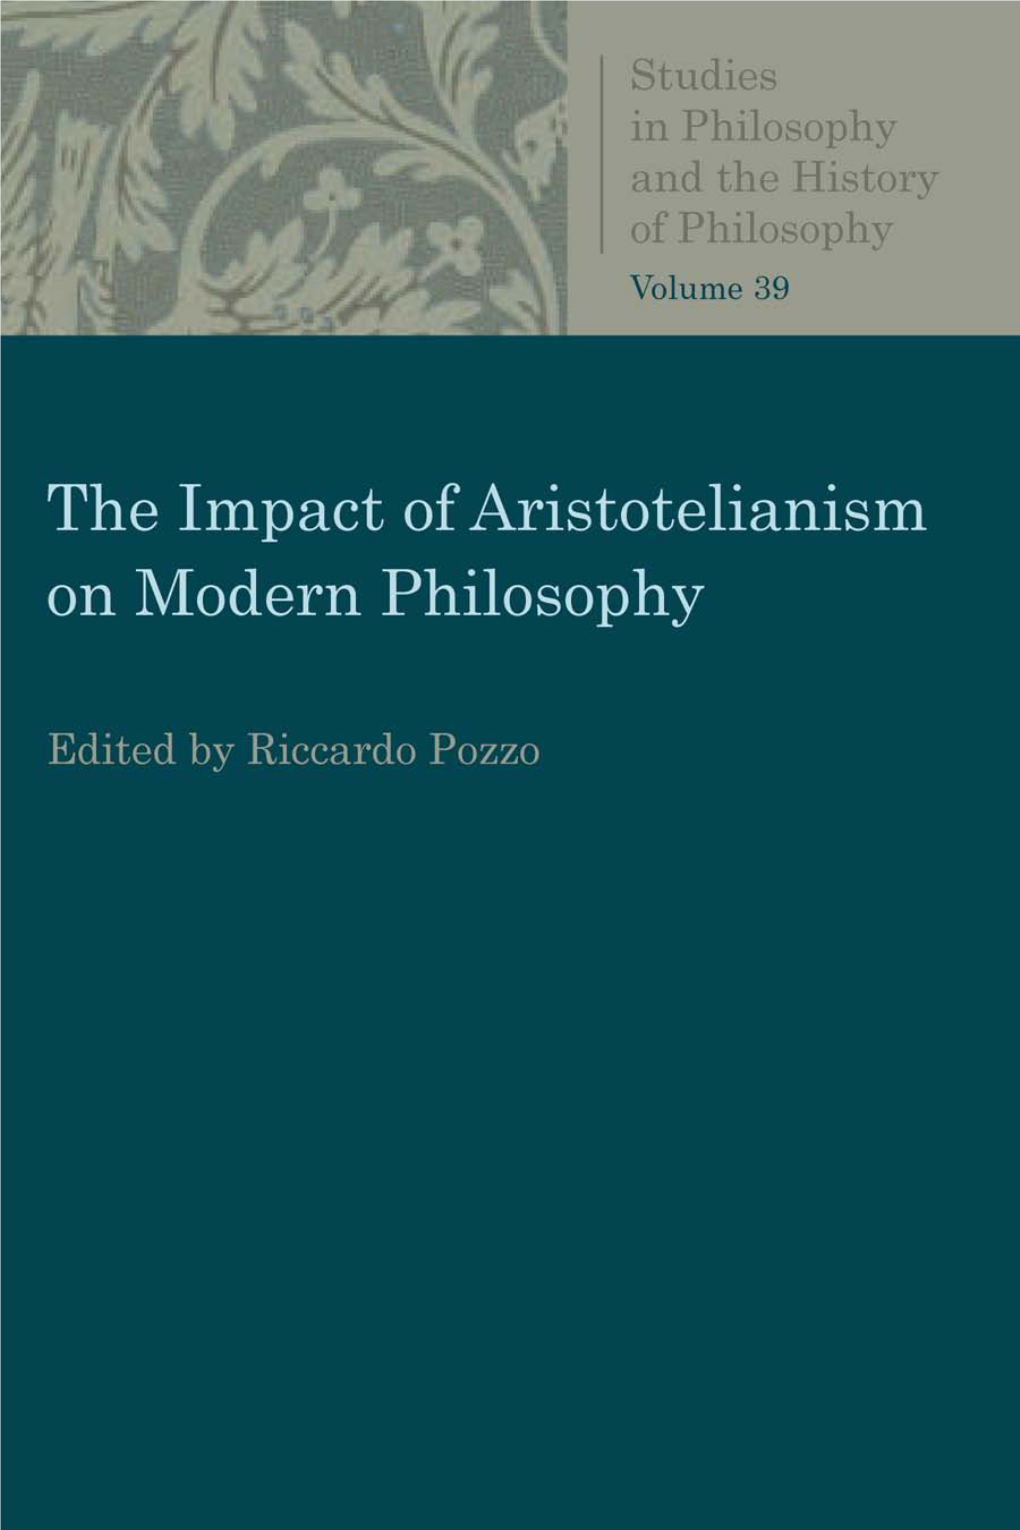 The Impact of Aristotelianism on Modern Philosophy